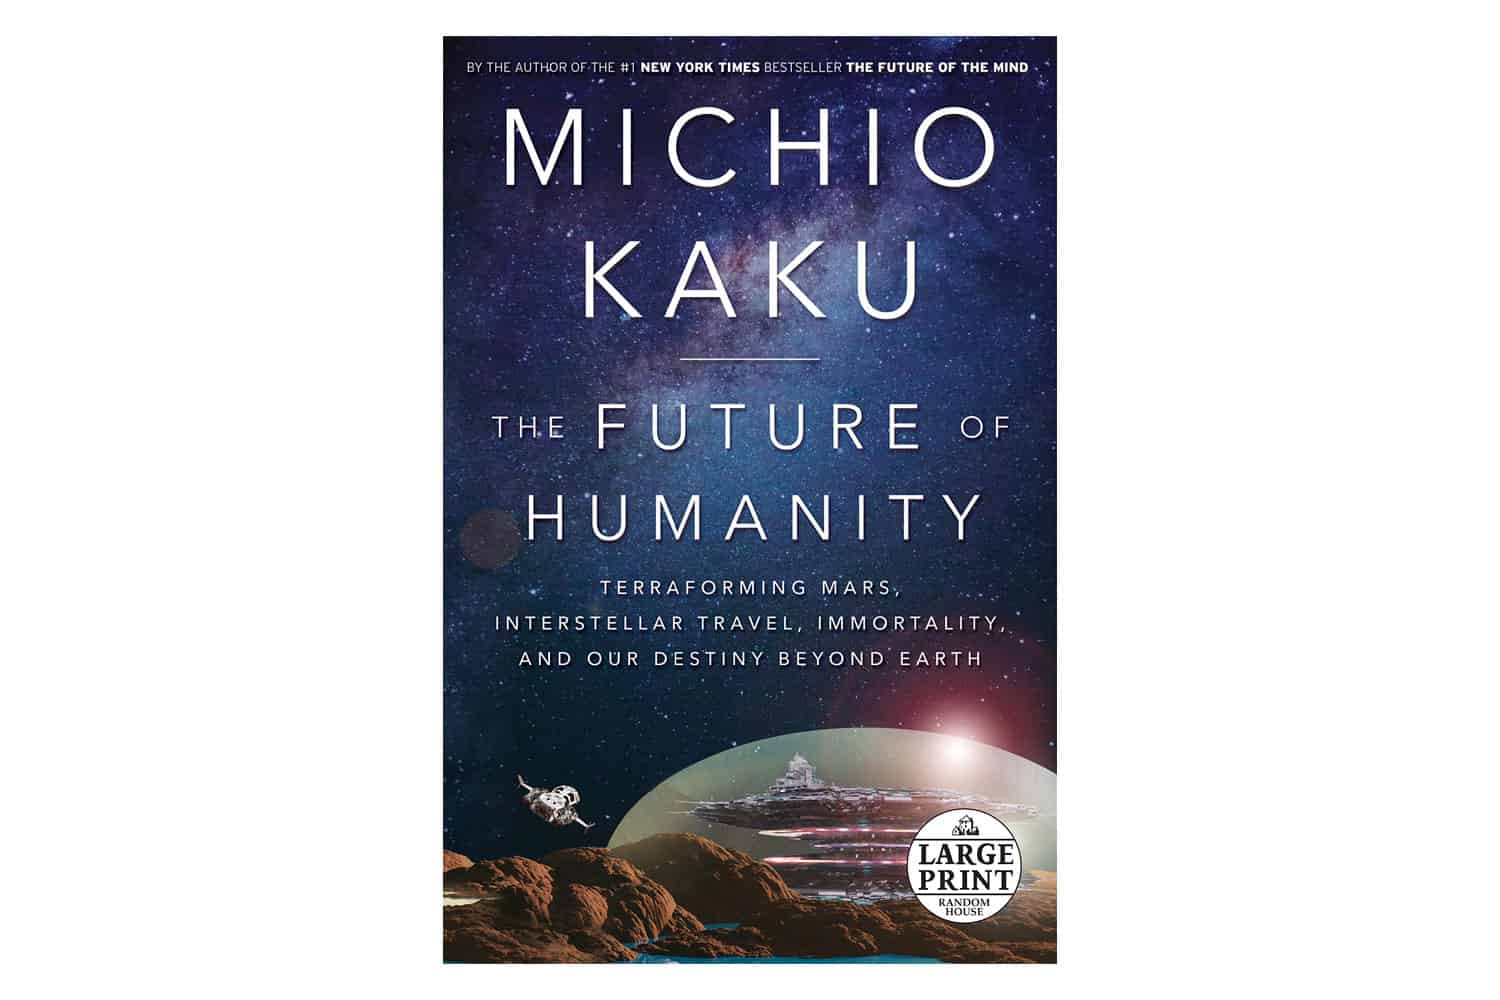 The-Future-of-Humanity-by-Michio-Kaku